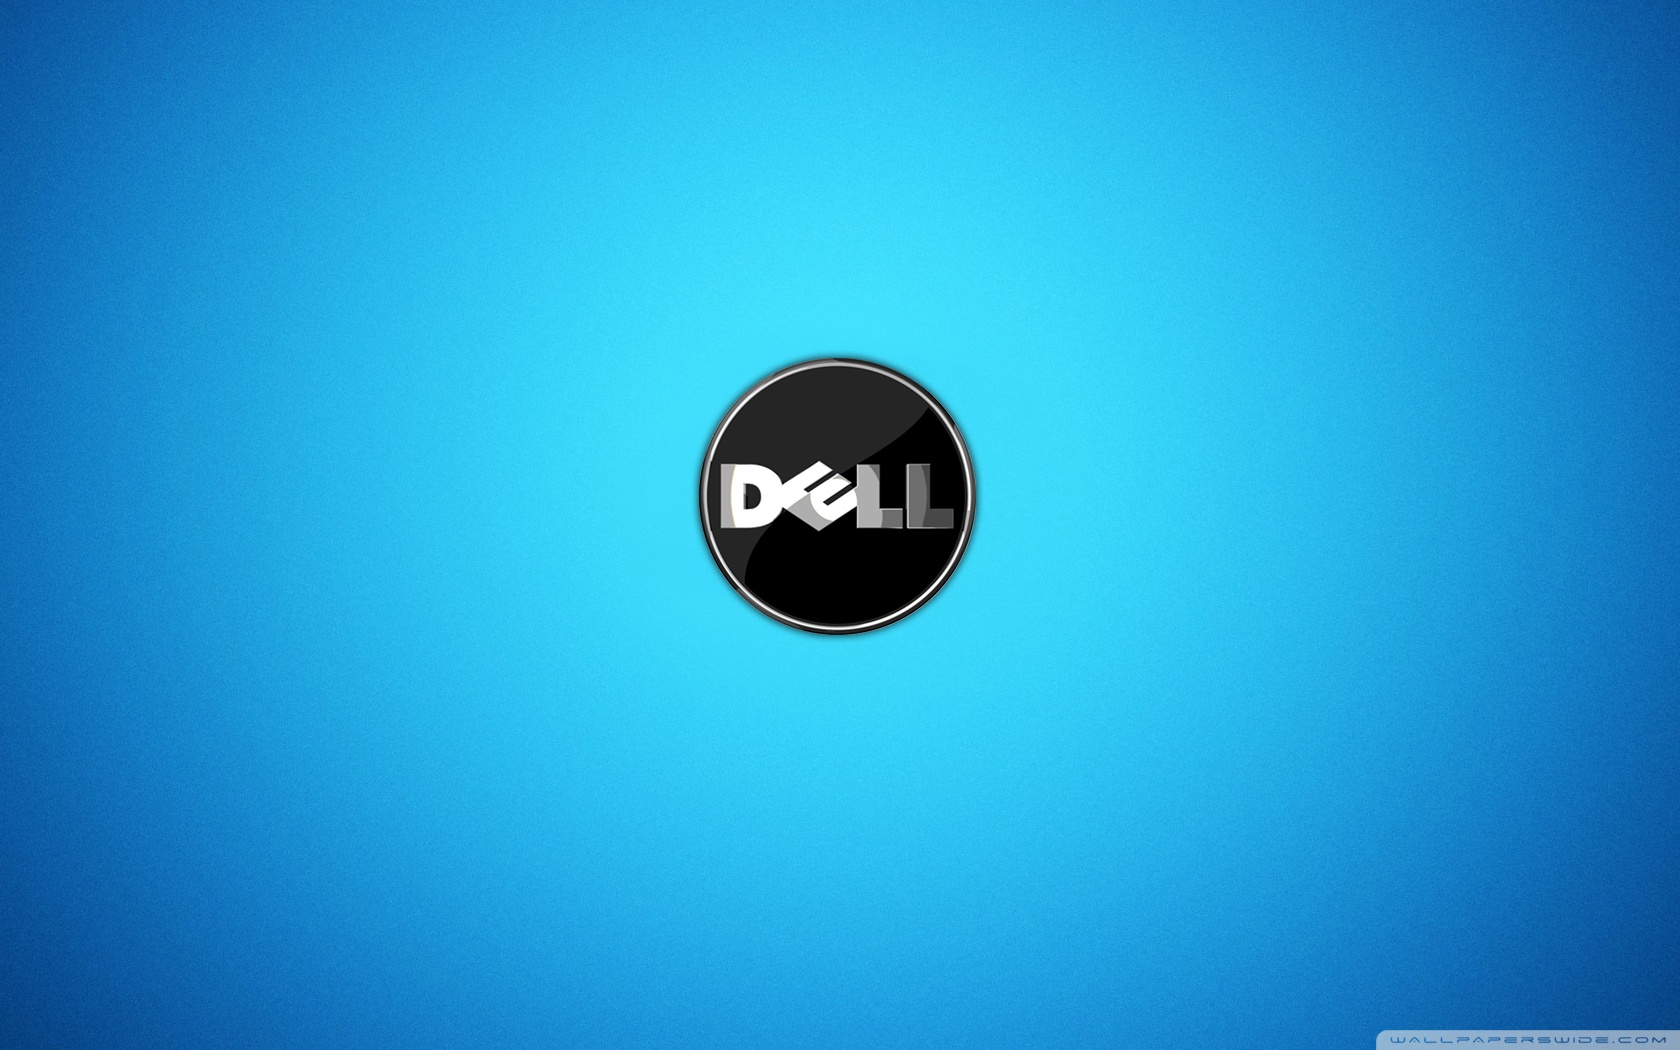 Dell By Aj Ultra Hd Desktop Background Wallpaper For 4k Uhd Tv Tablet Smartphone